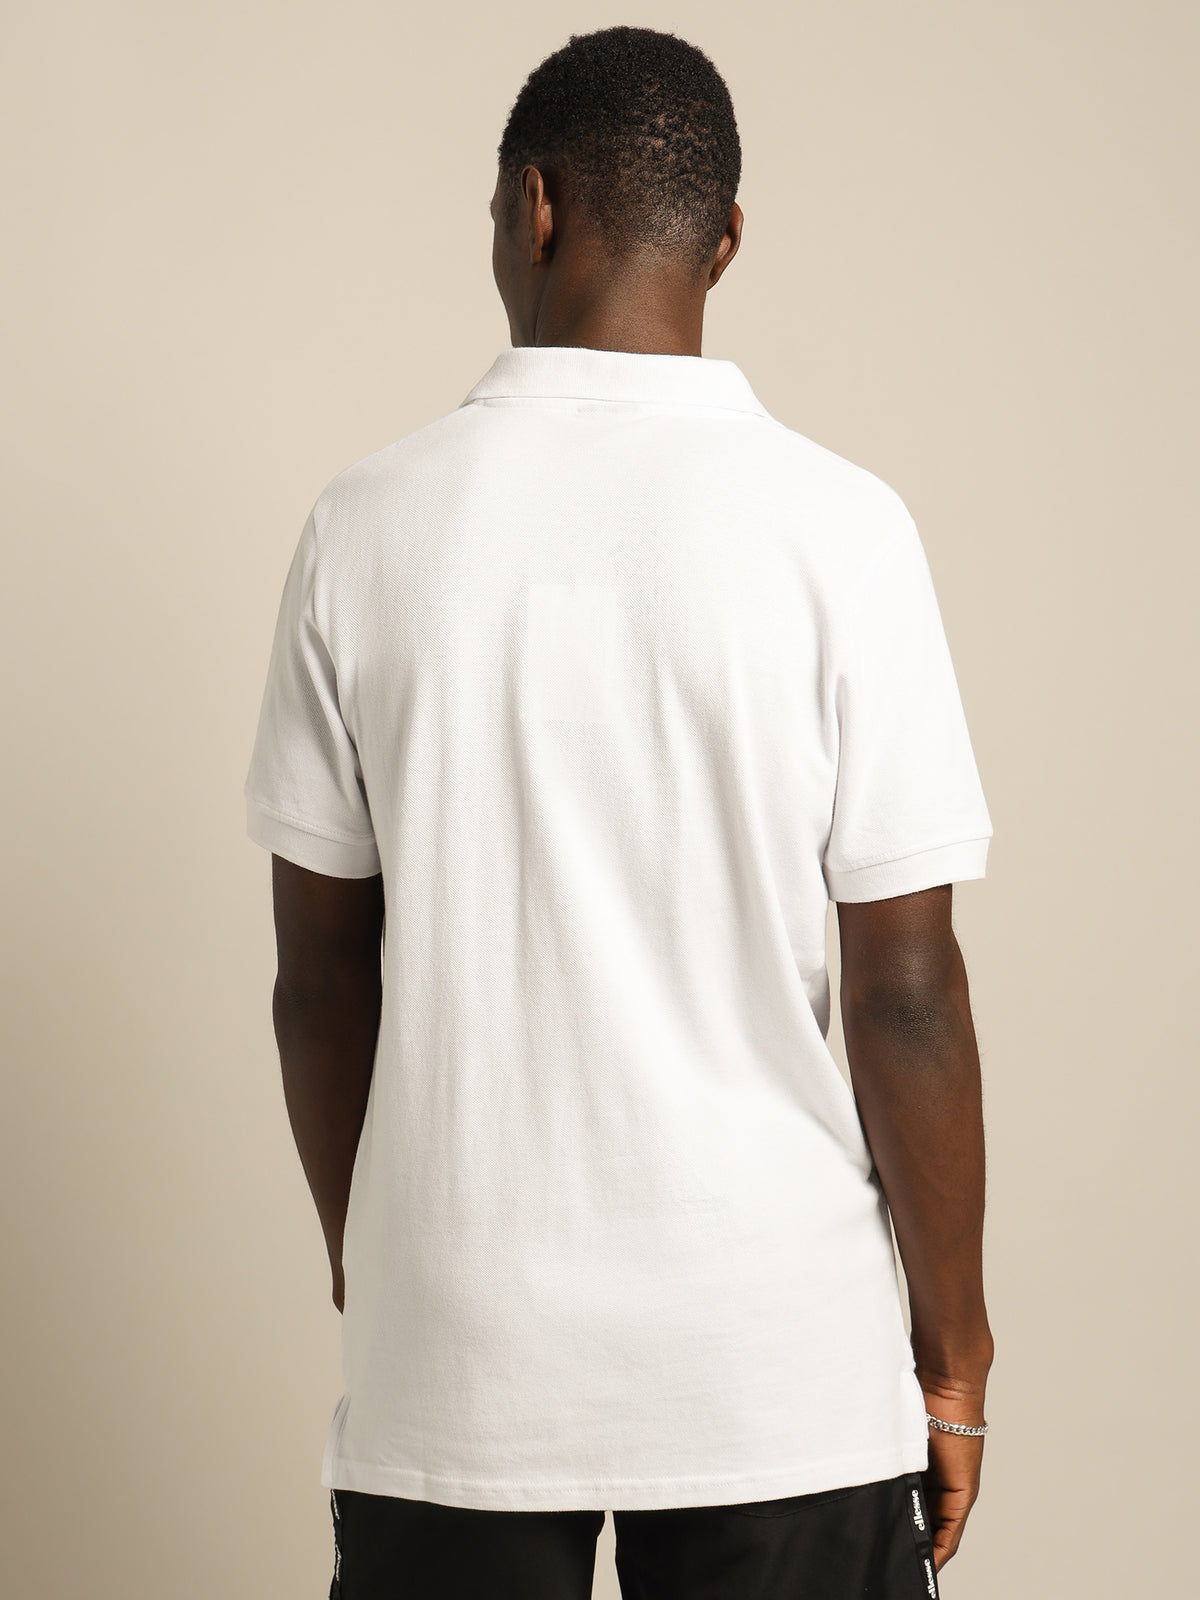 Montura Polo Shirt in White